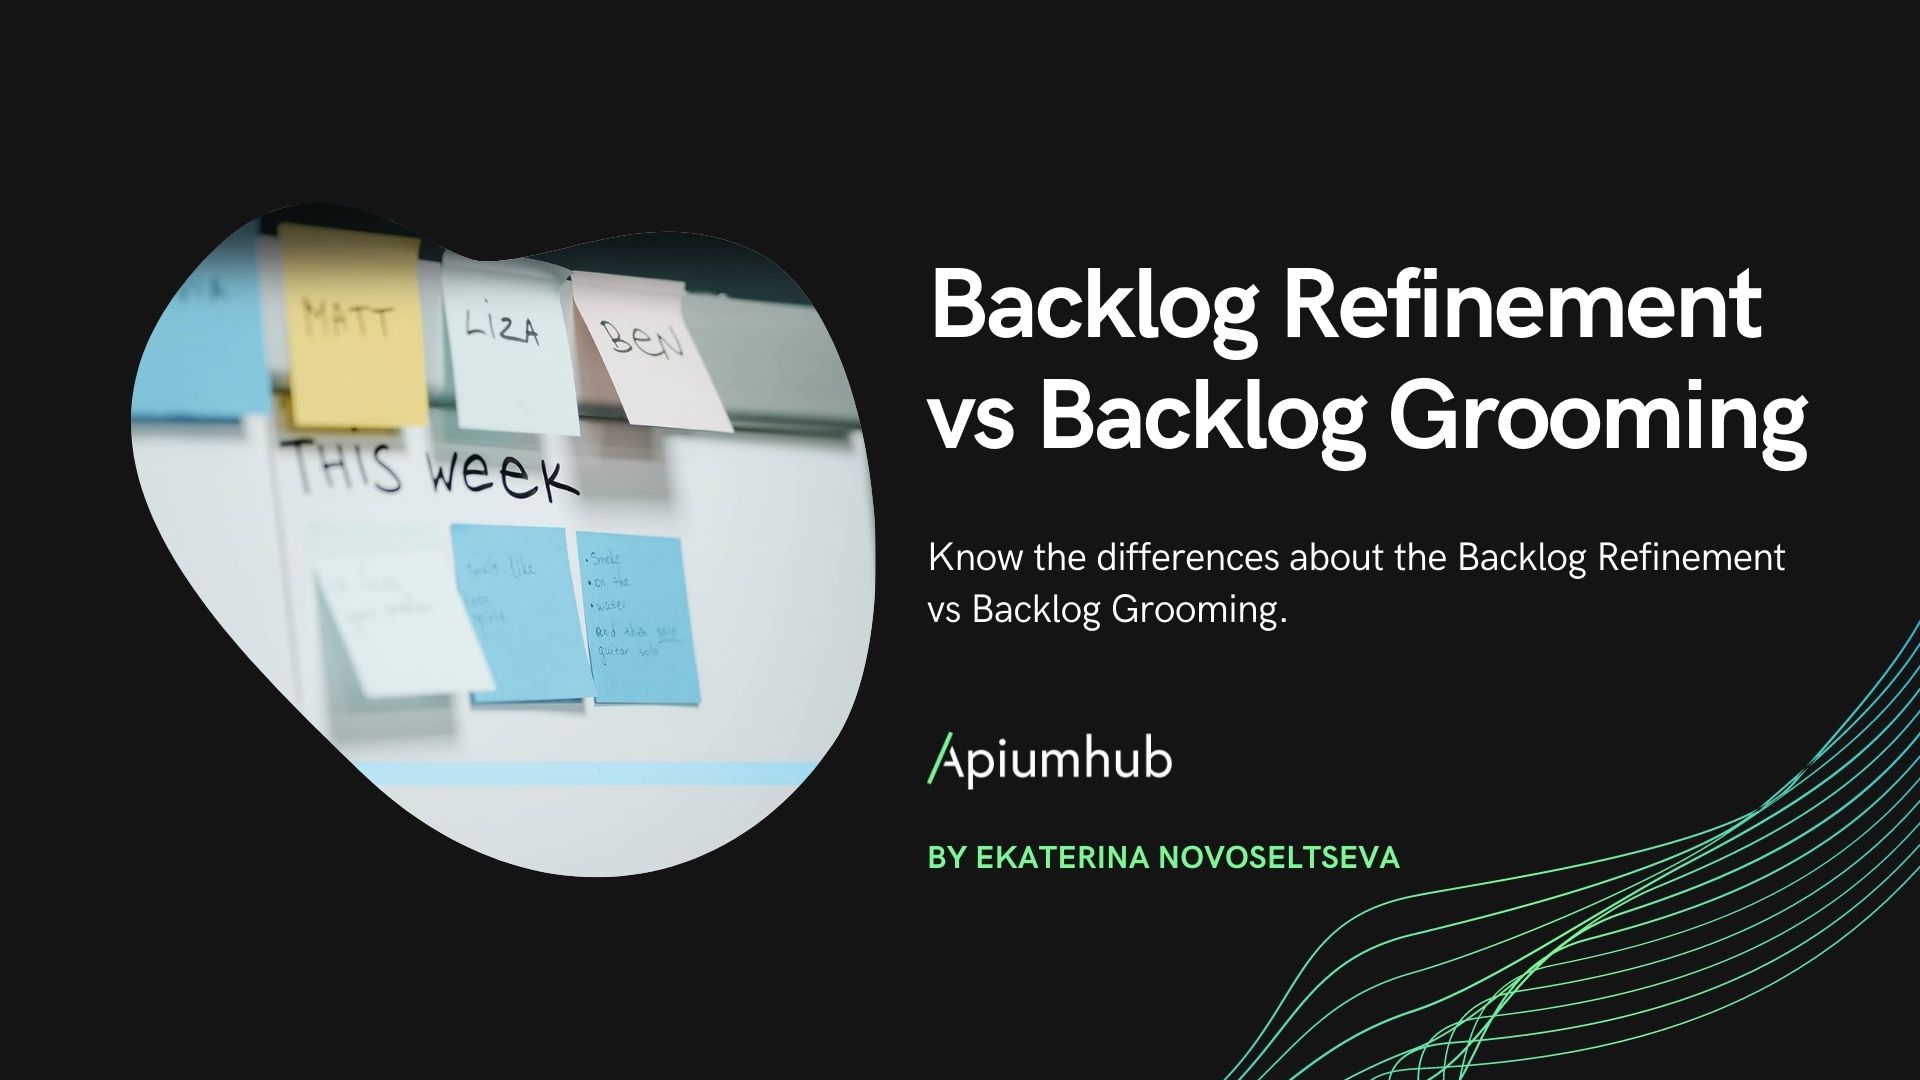 Backlog Refinement or Backlog Grooming